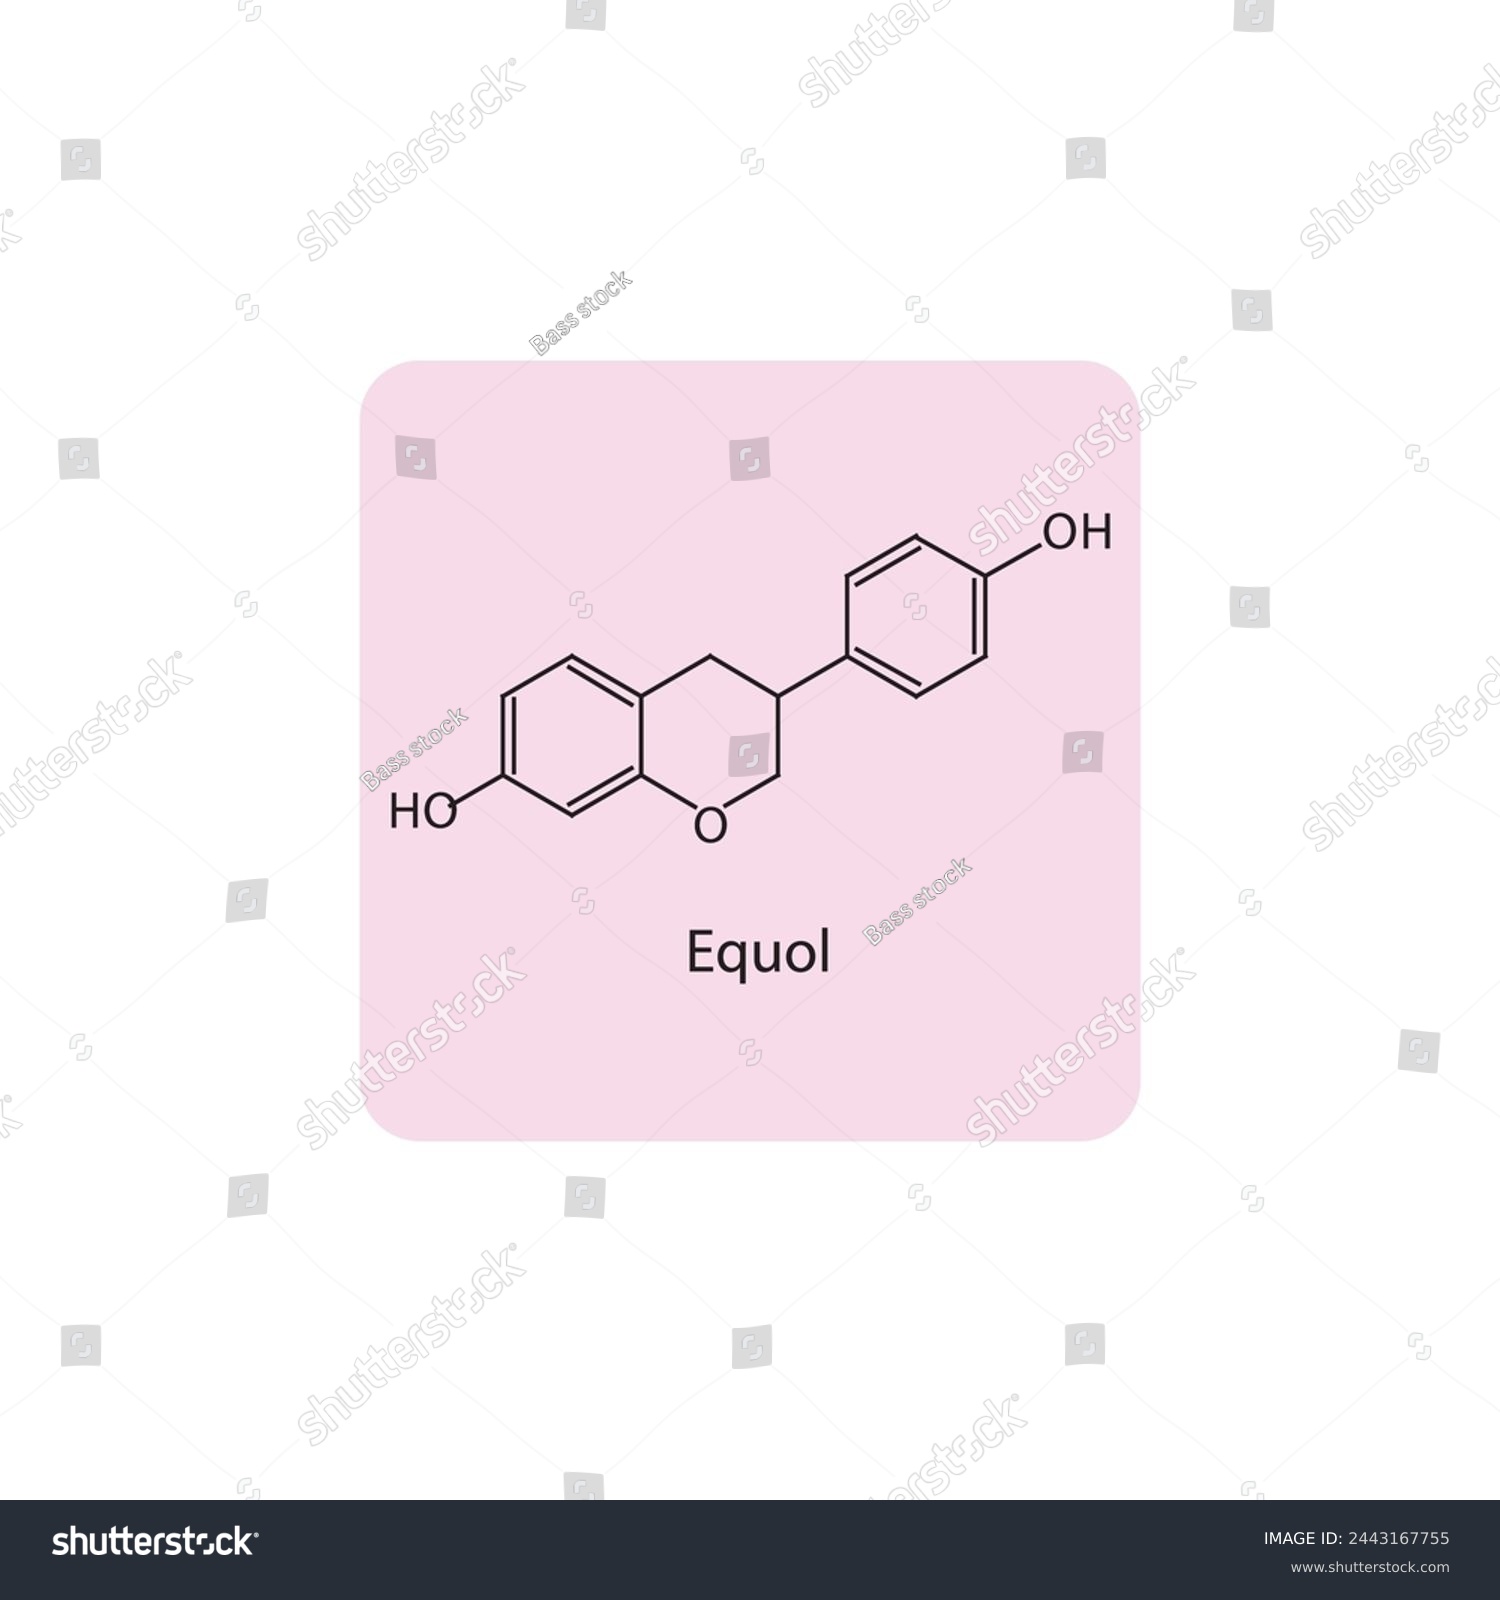 SVG of Equol skeletal structure diagram.Isoflavanone compound molecule scientific illustration on pink background. svg